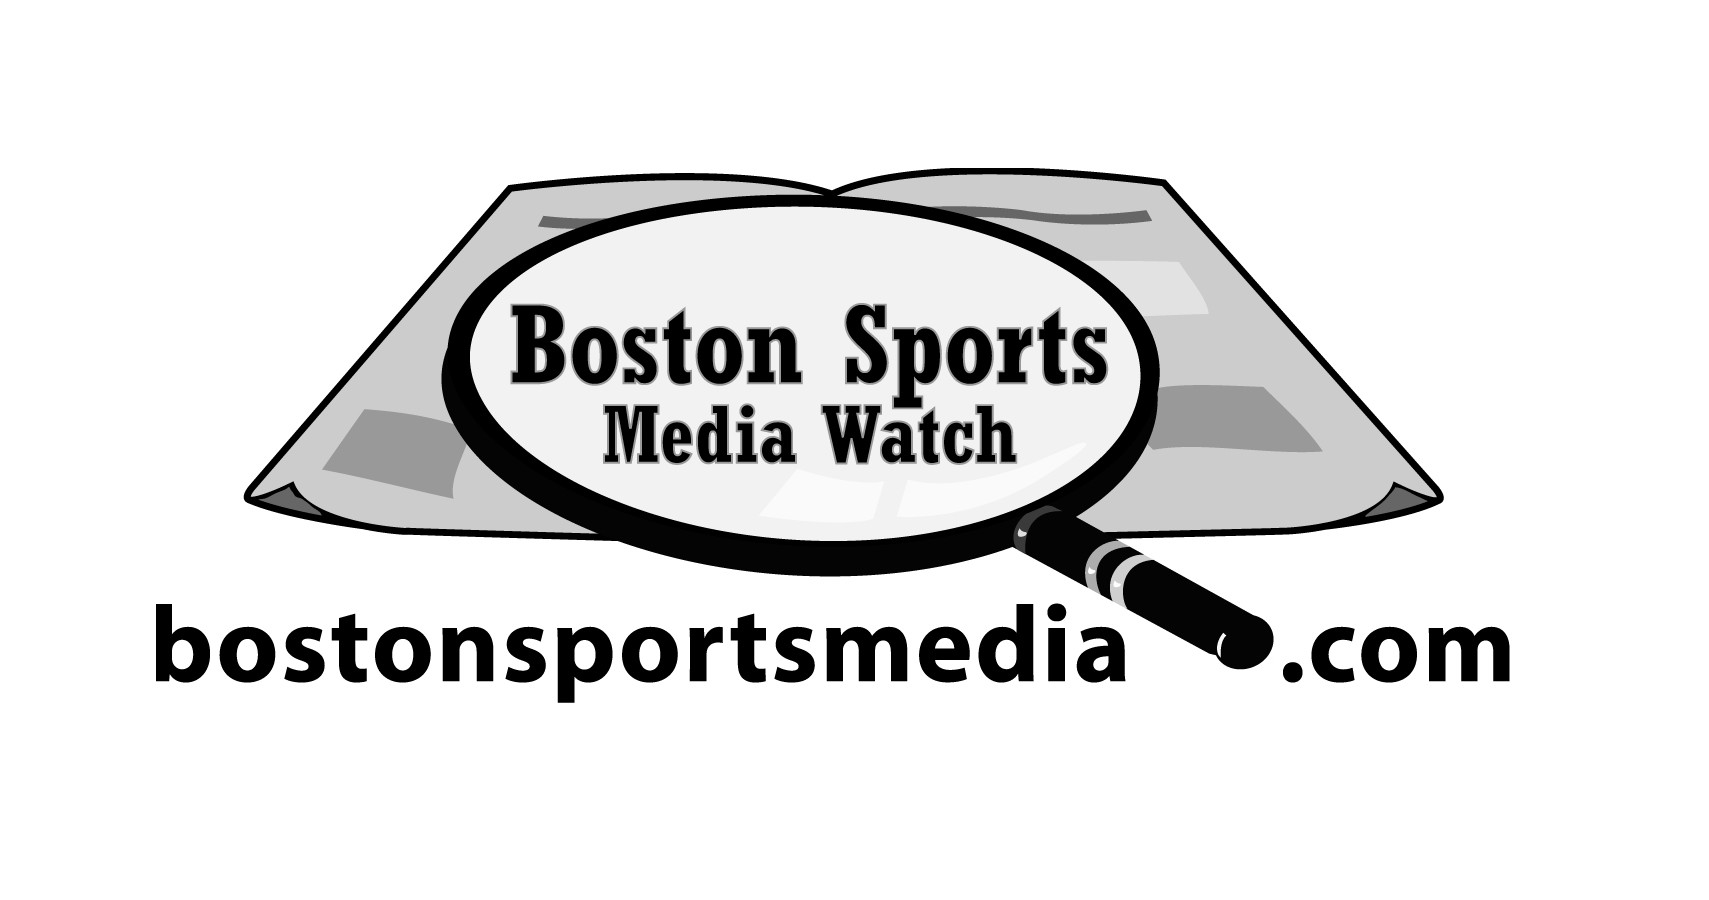 Boston Sports Media Watch